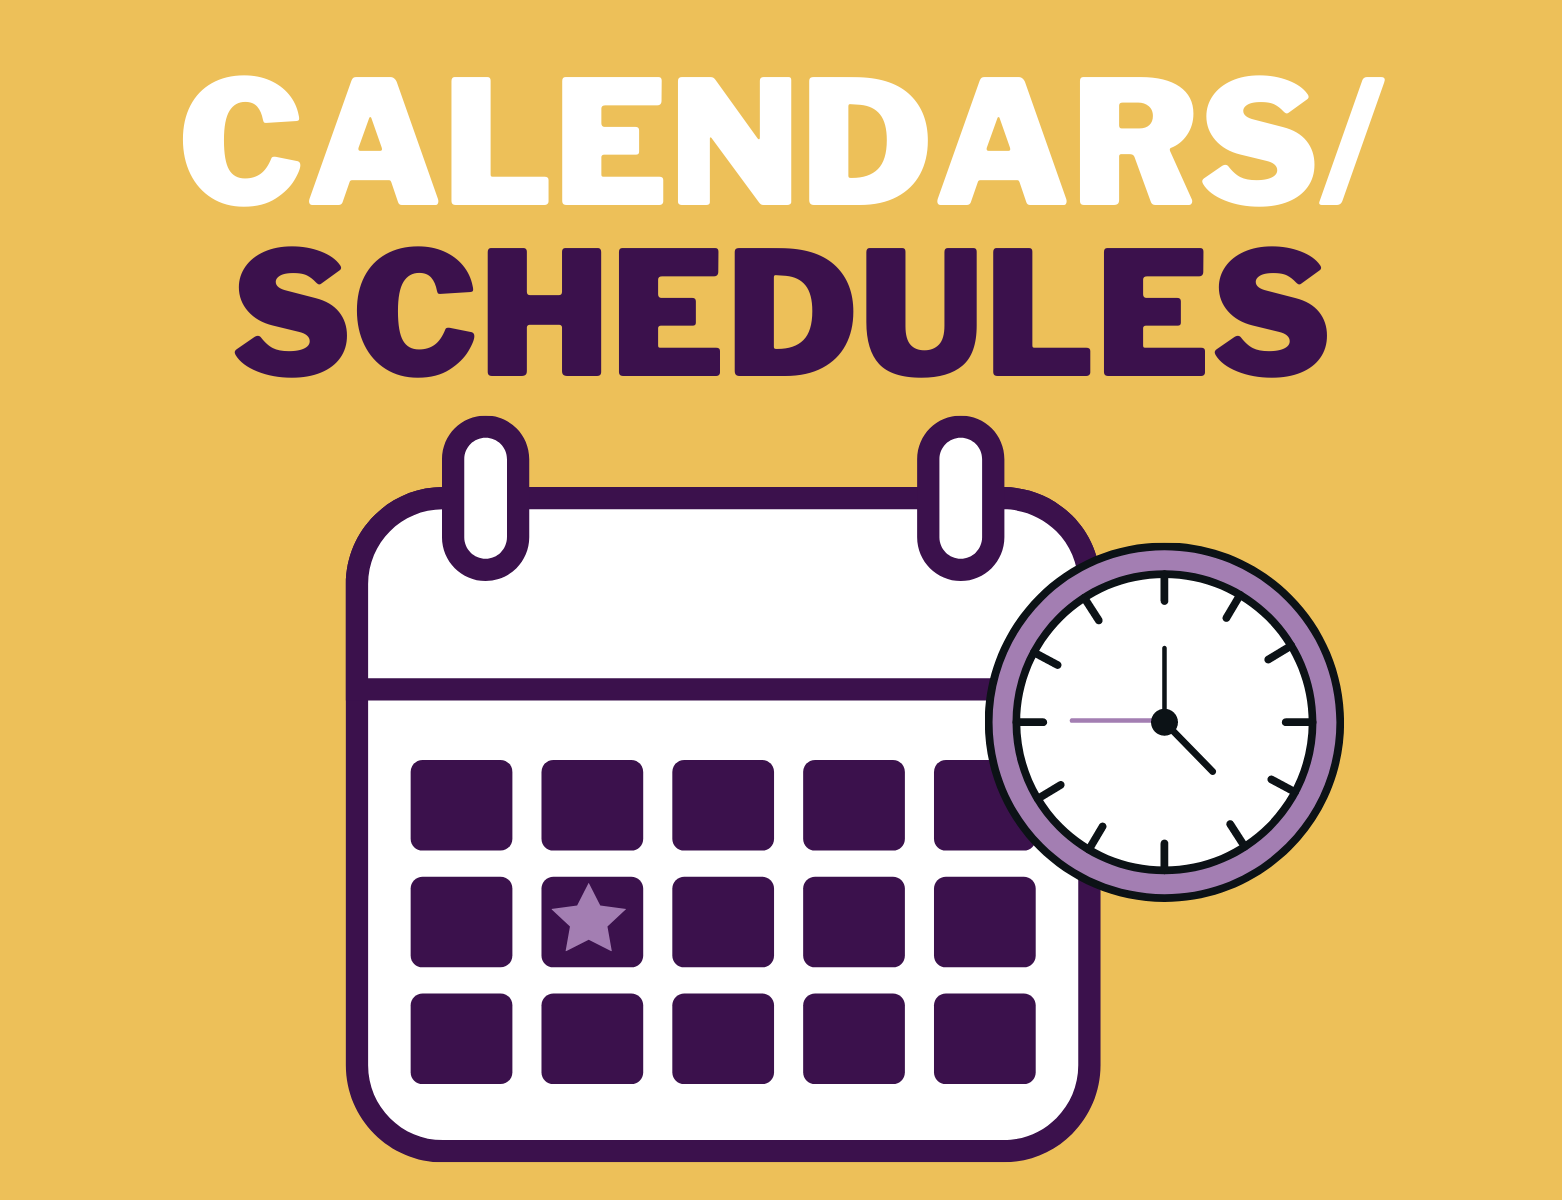 Calendars/Schedules Link